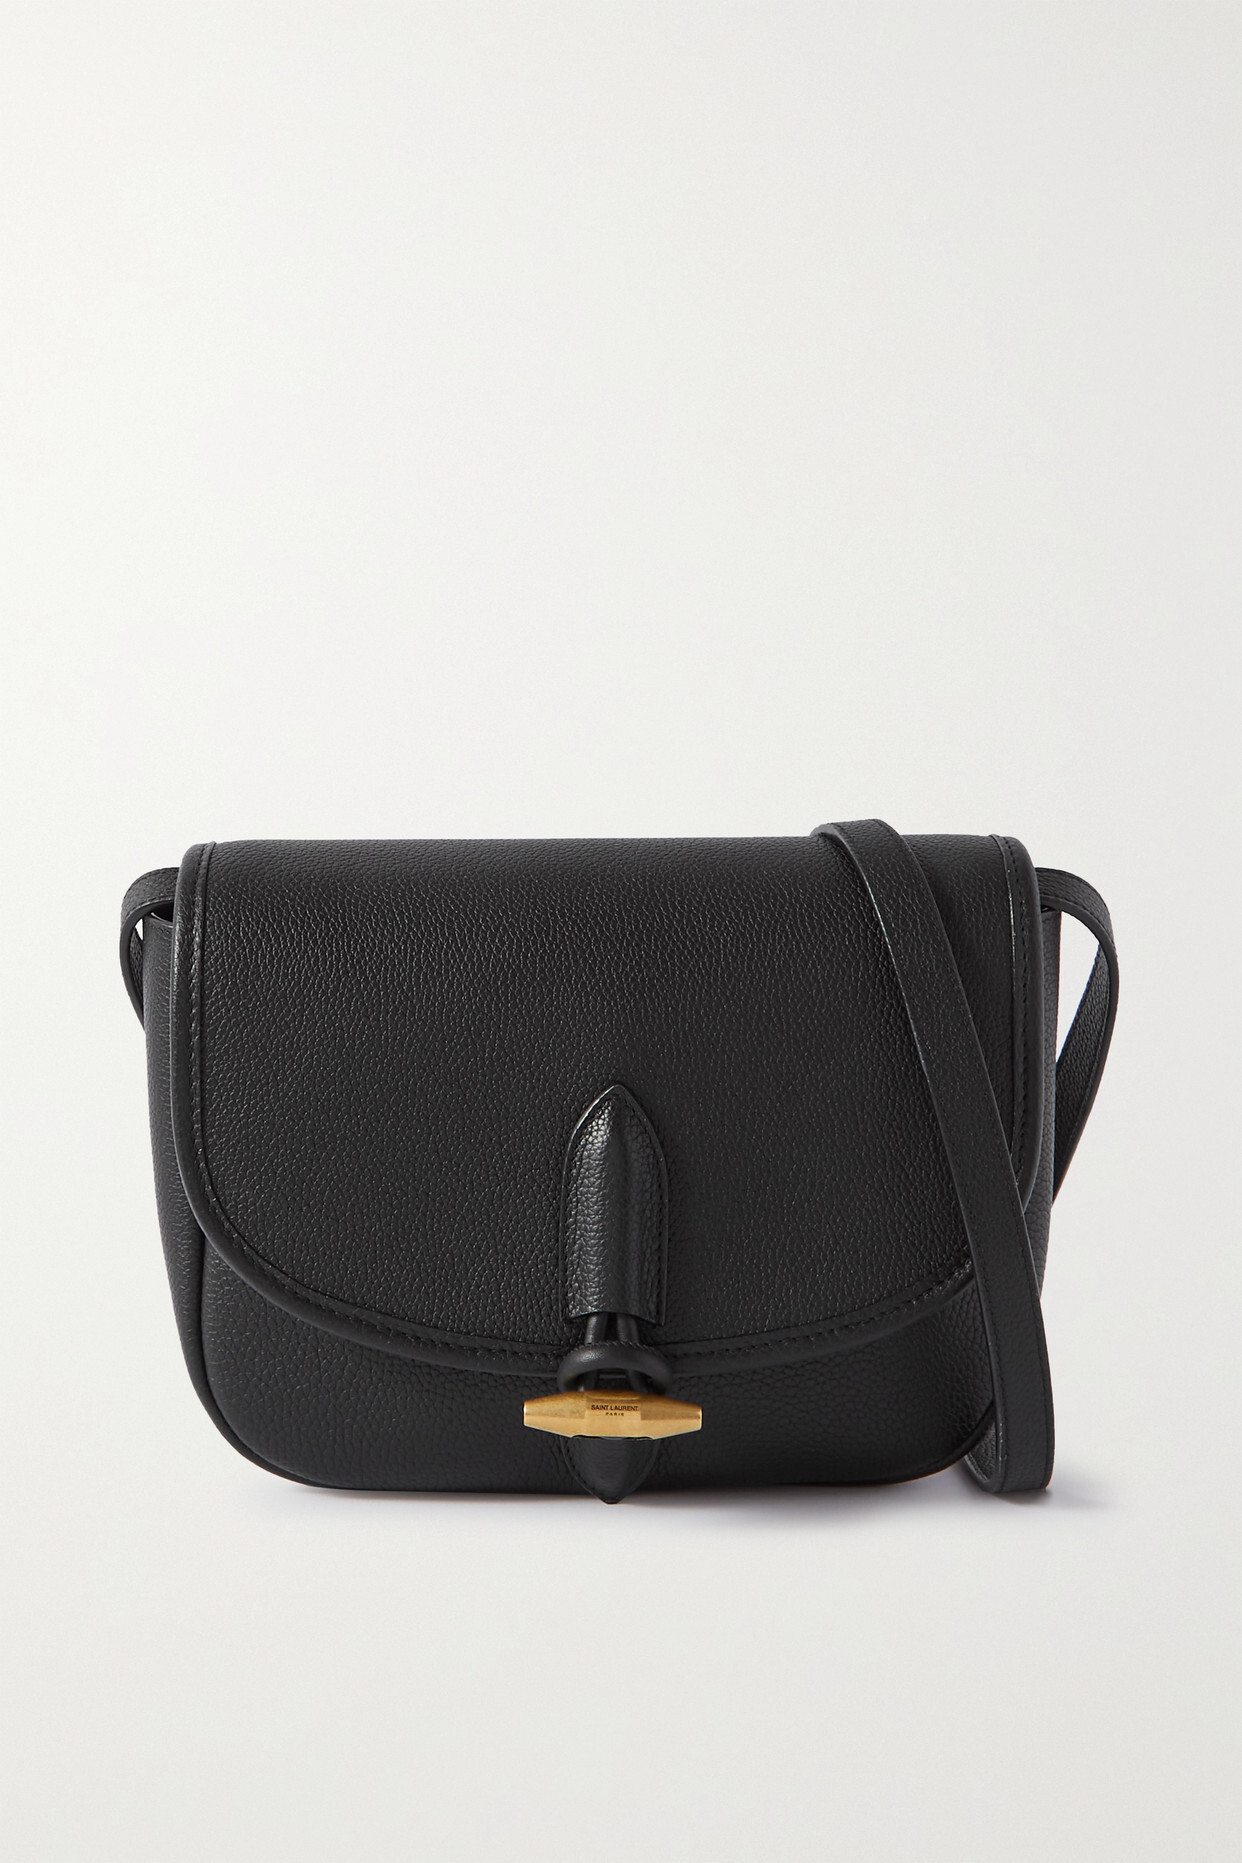 SAINT LAURENT - Le Caban Textured-leather Shoulder Bag - Black